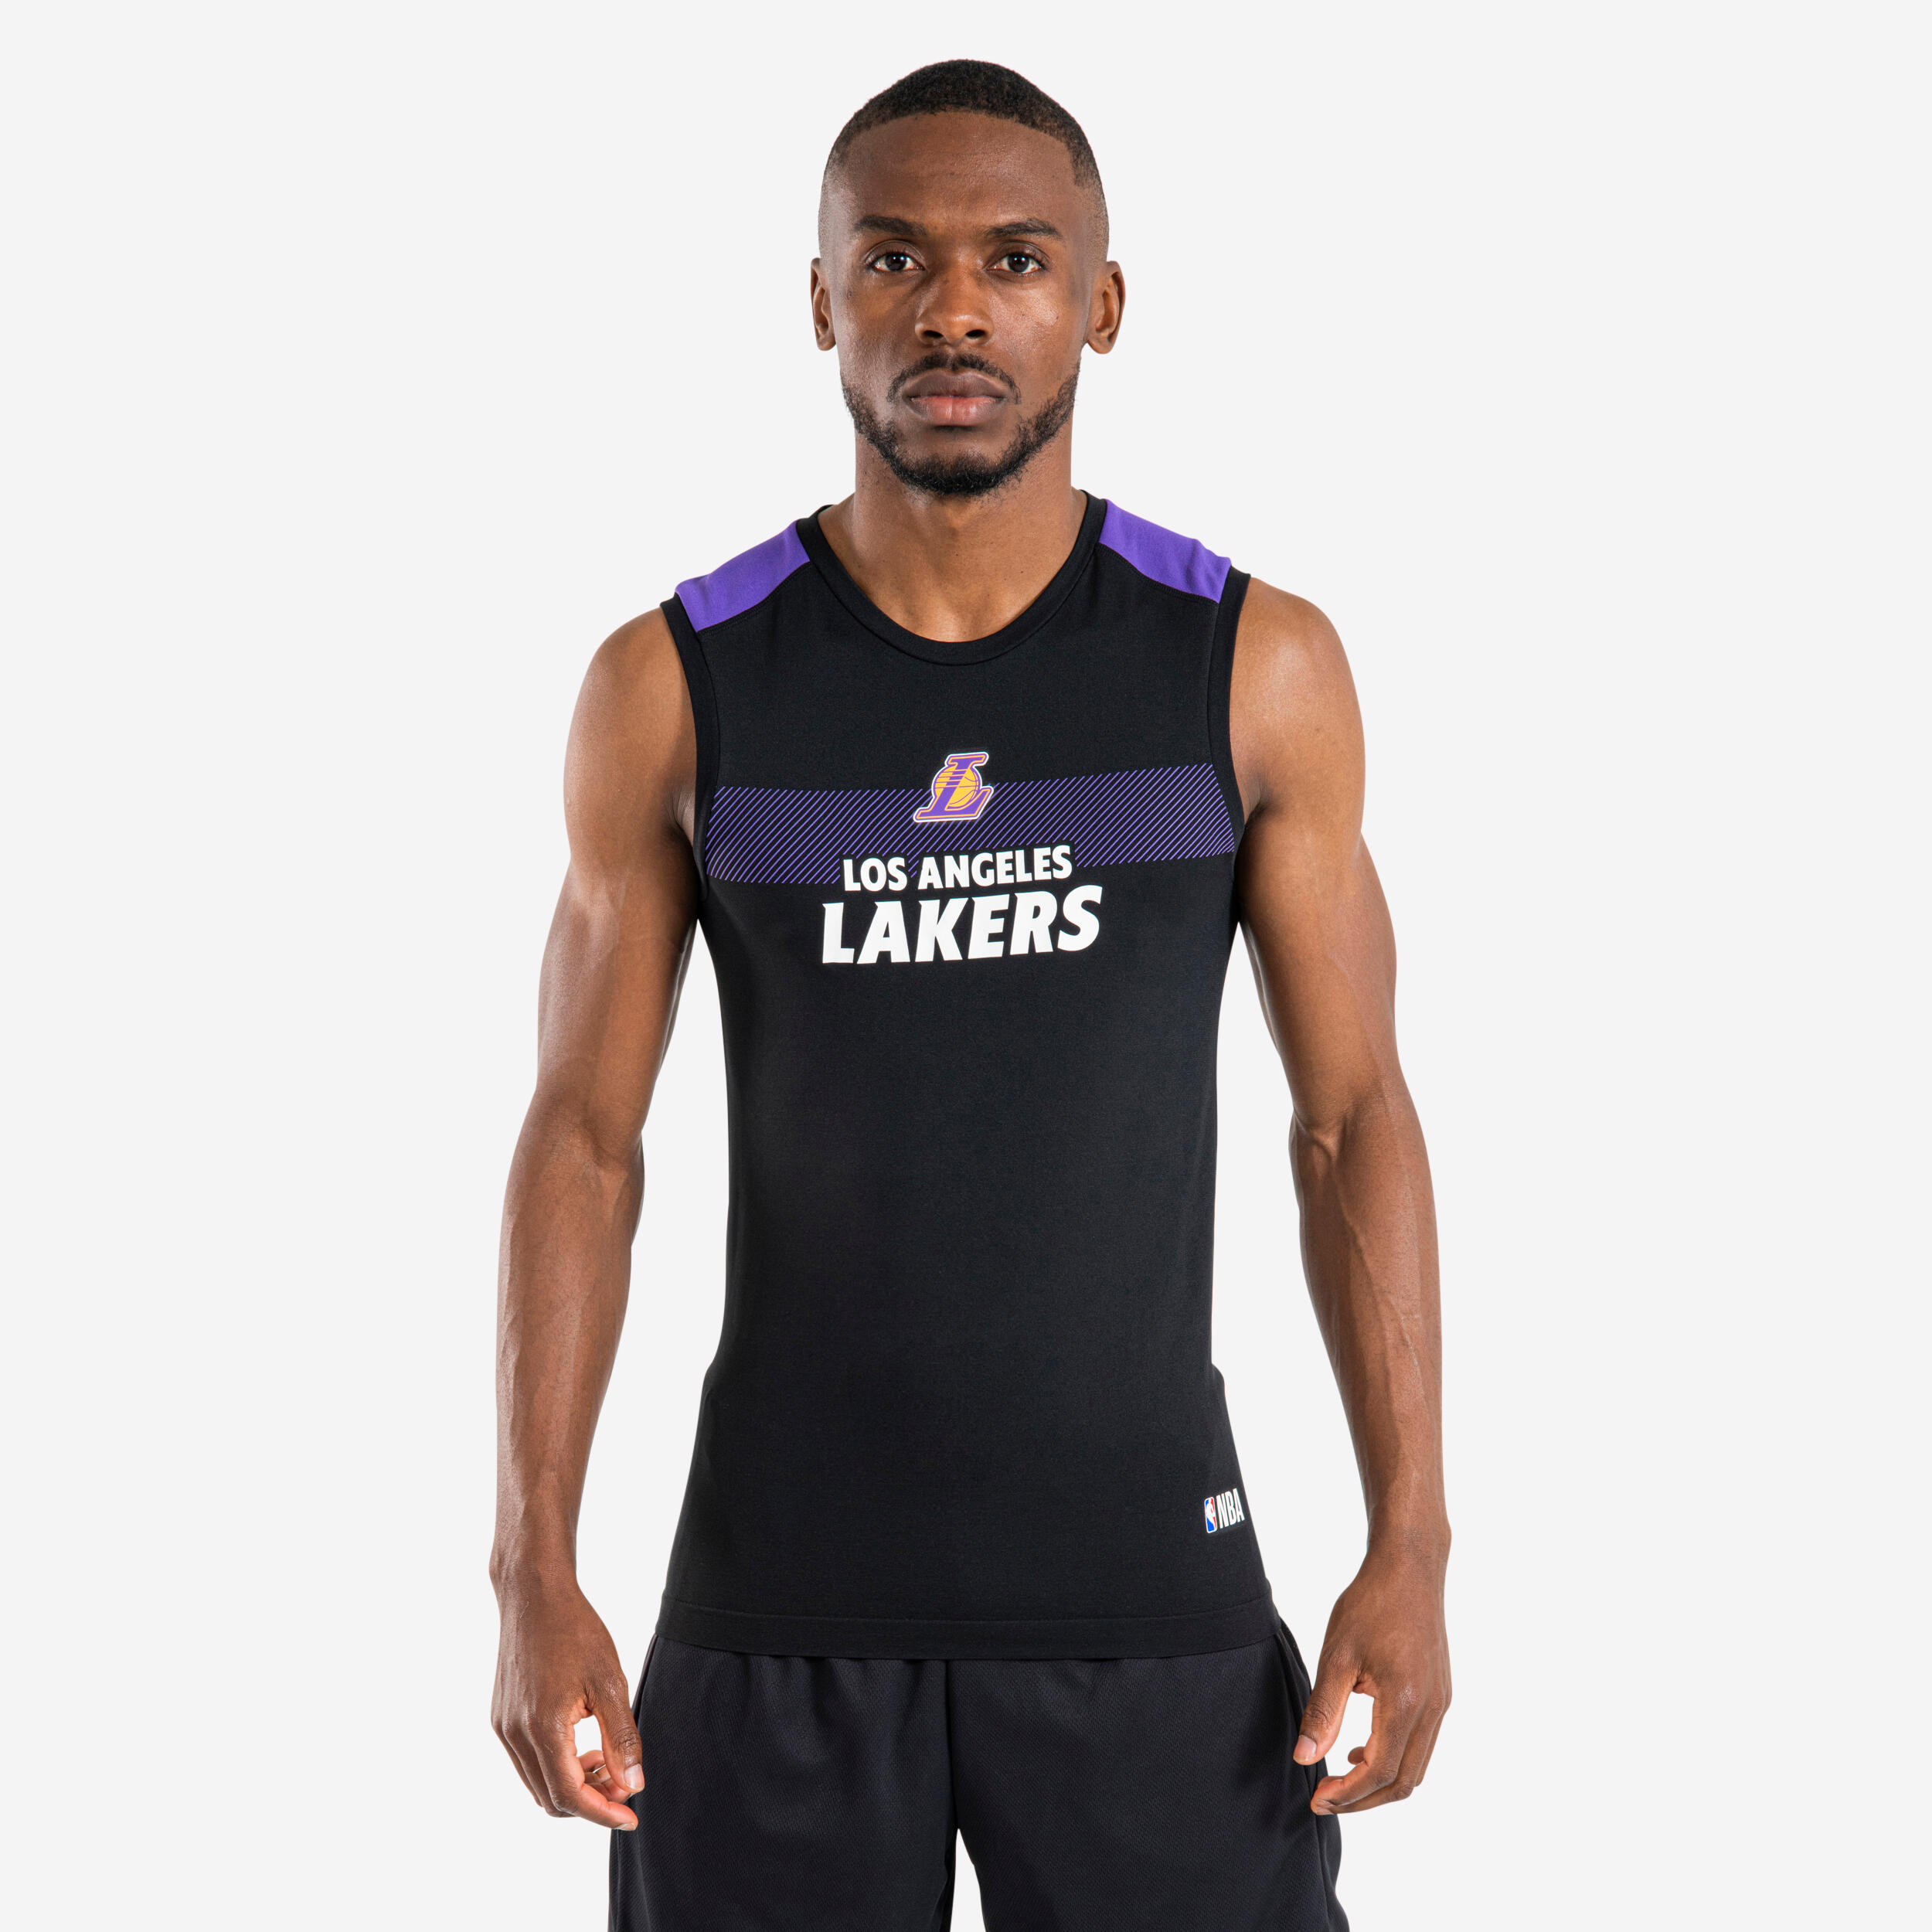 Adult Sleeveless Basketball Base Layer Jersey UT500 - NBA Los Angeles Lakers/Black 1/9